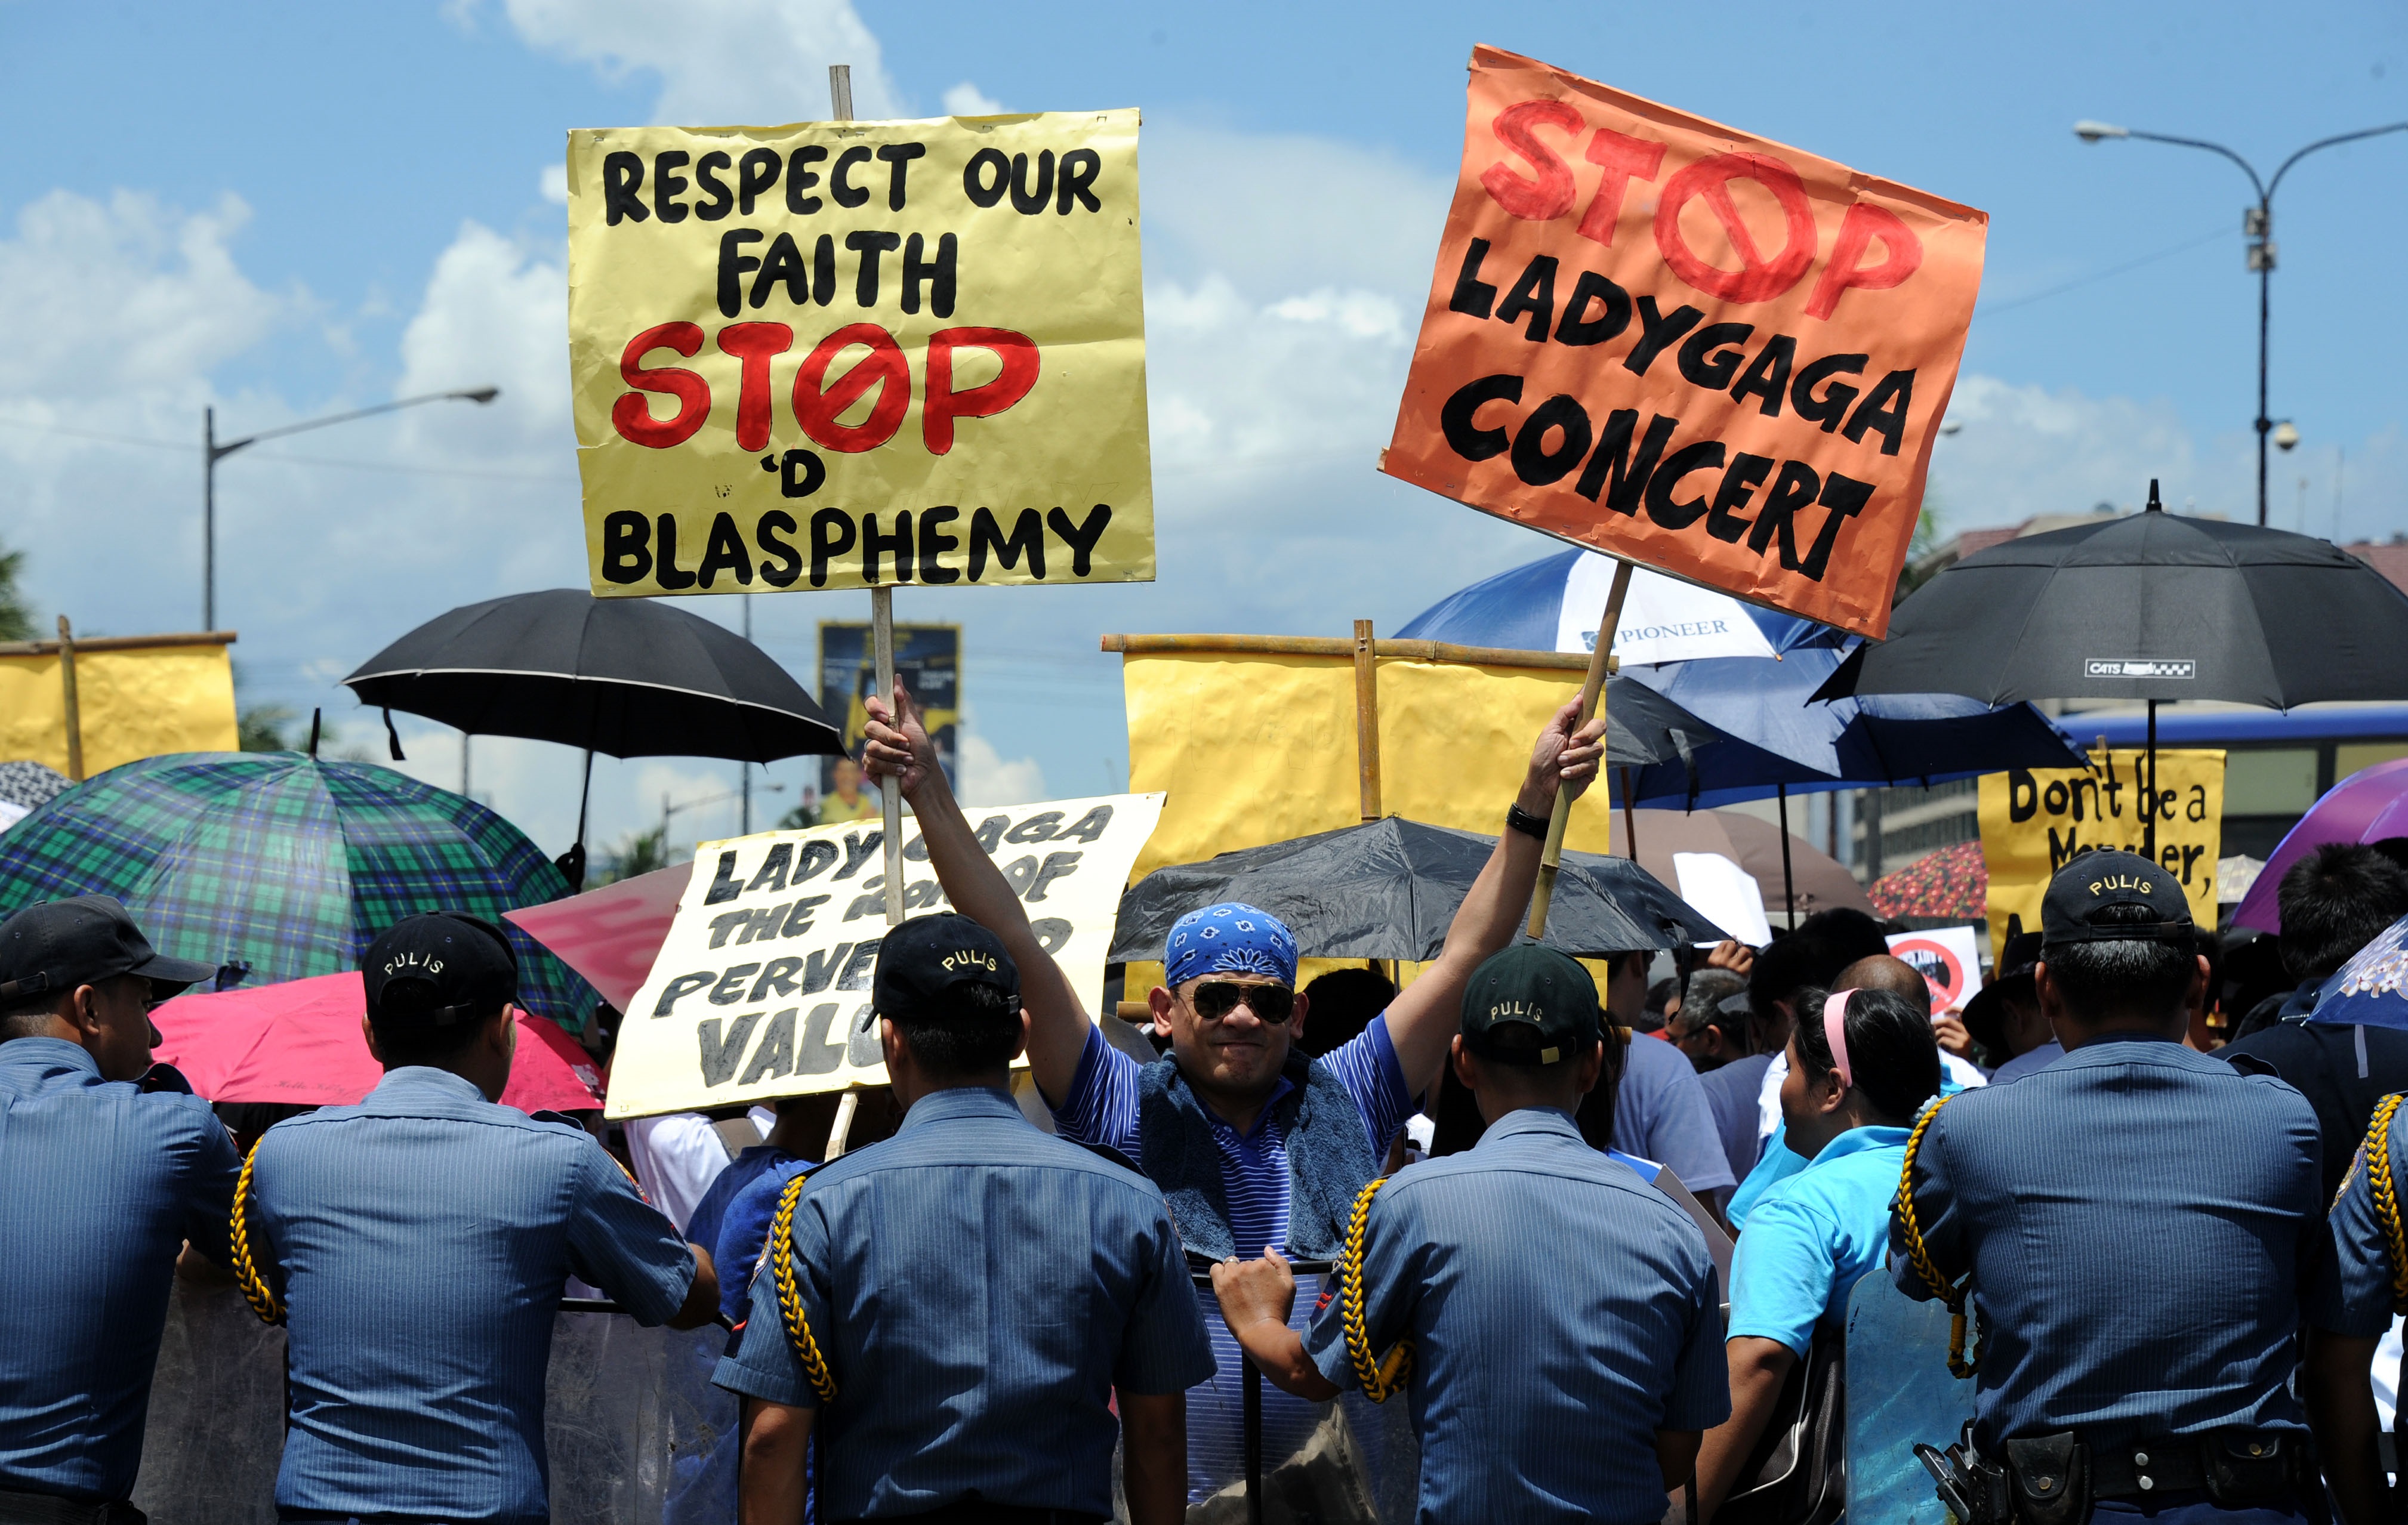 Protests against Lady Gaga in Manila